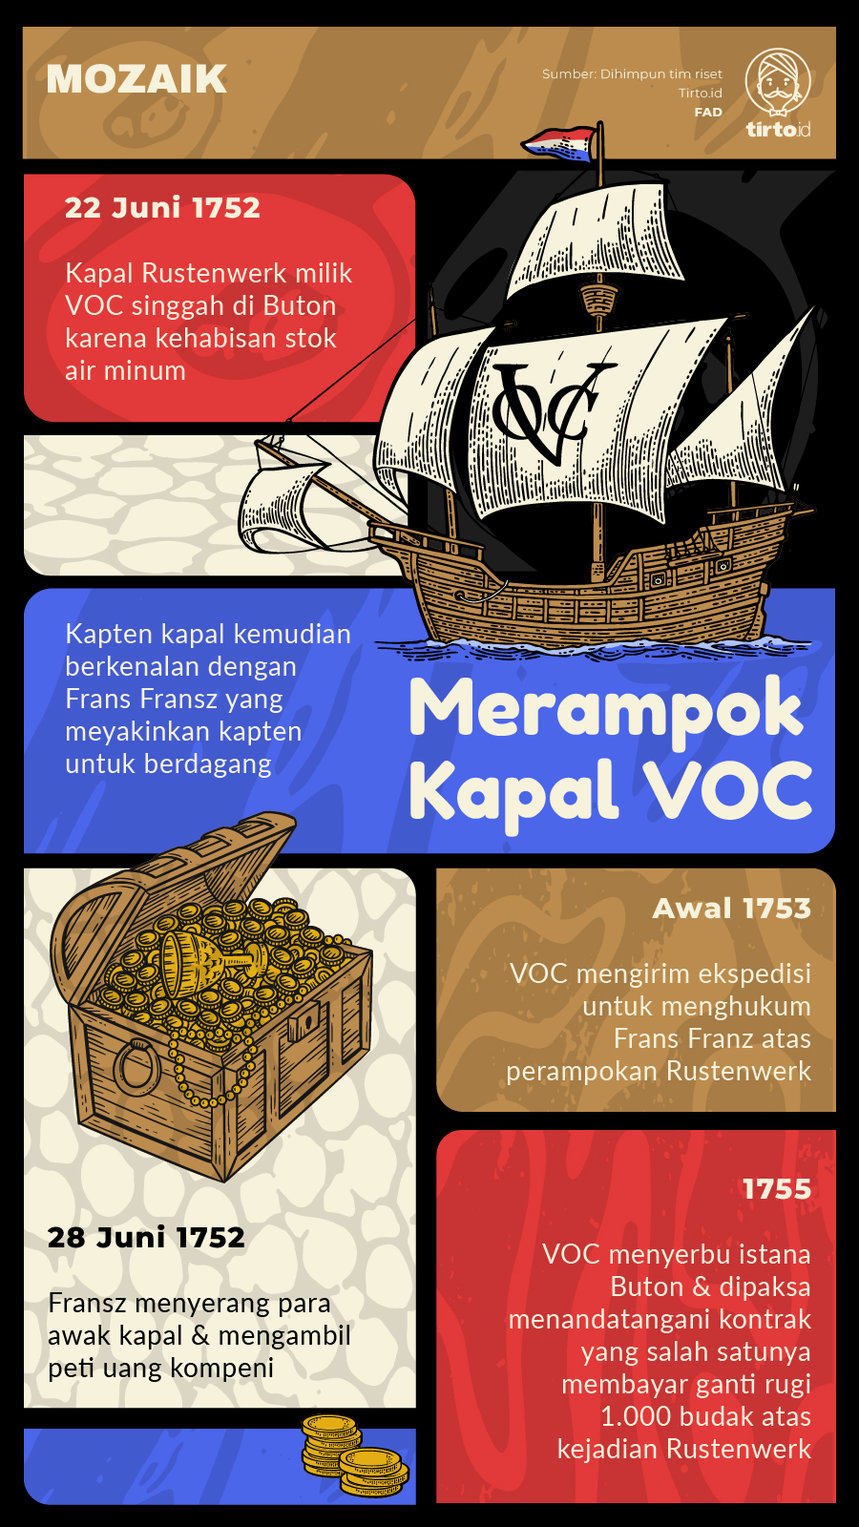 Infografik Mozaik Merampok Kapal VOC